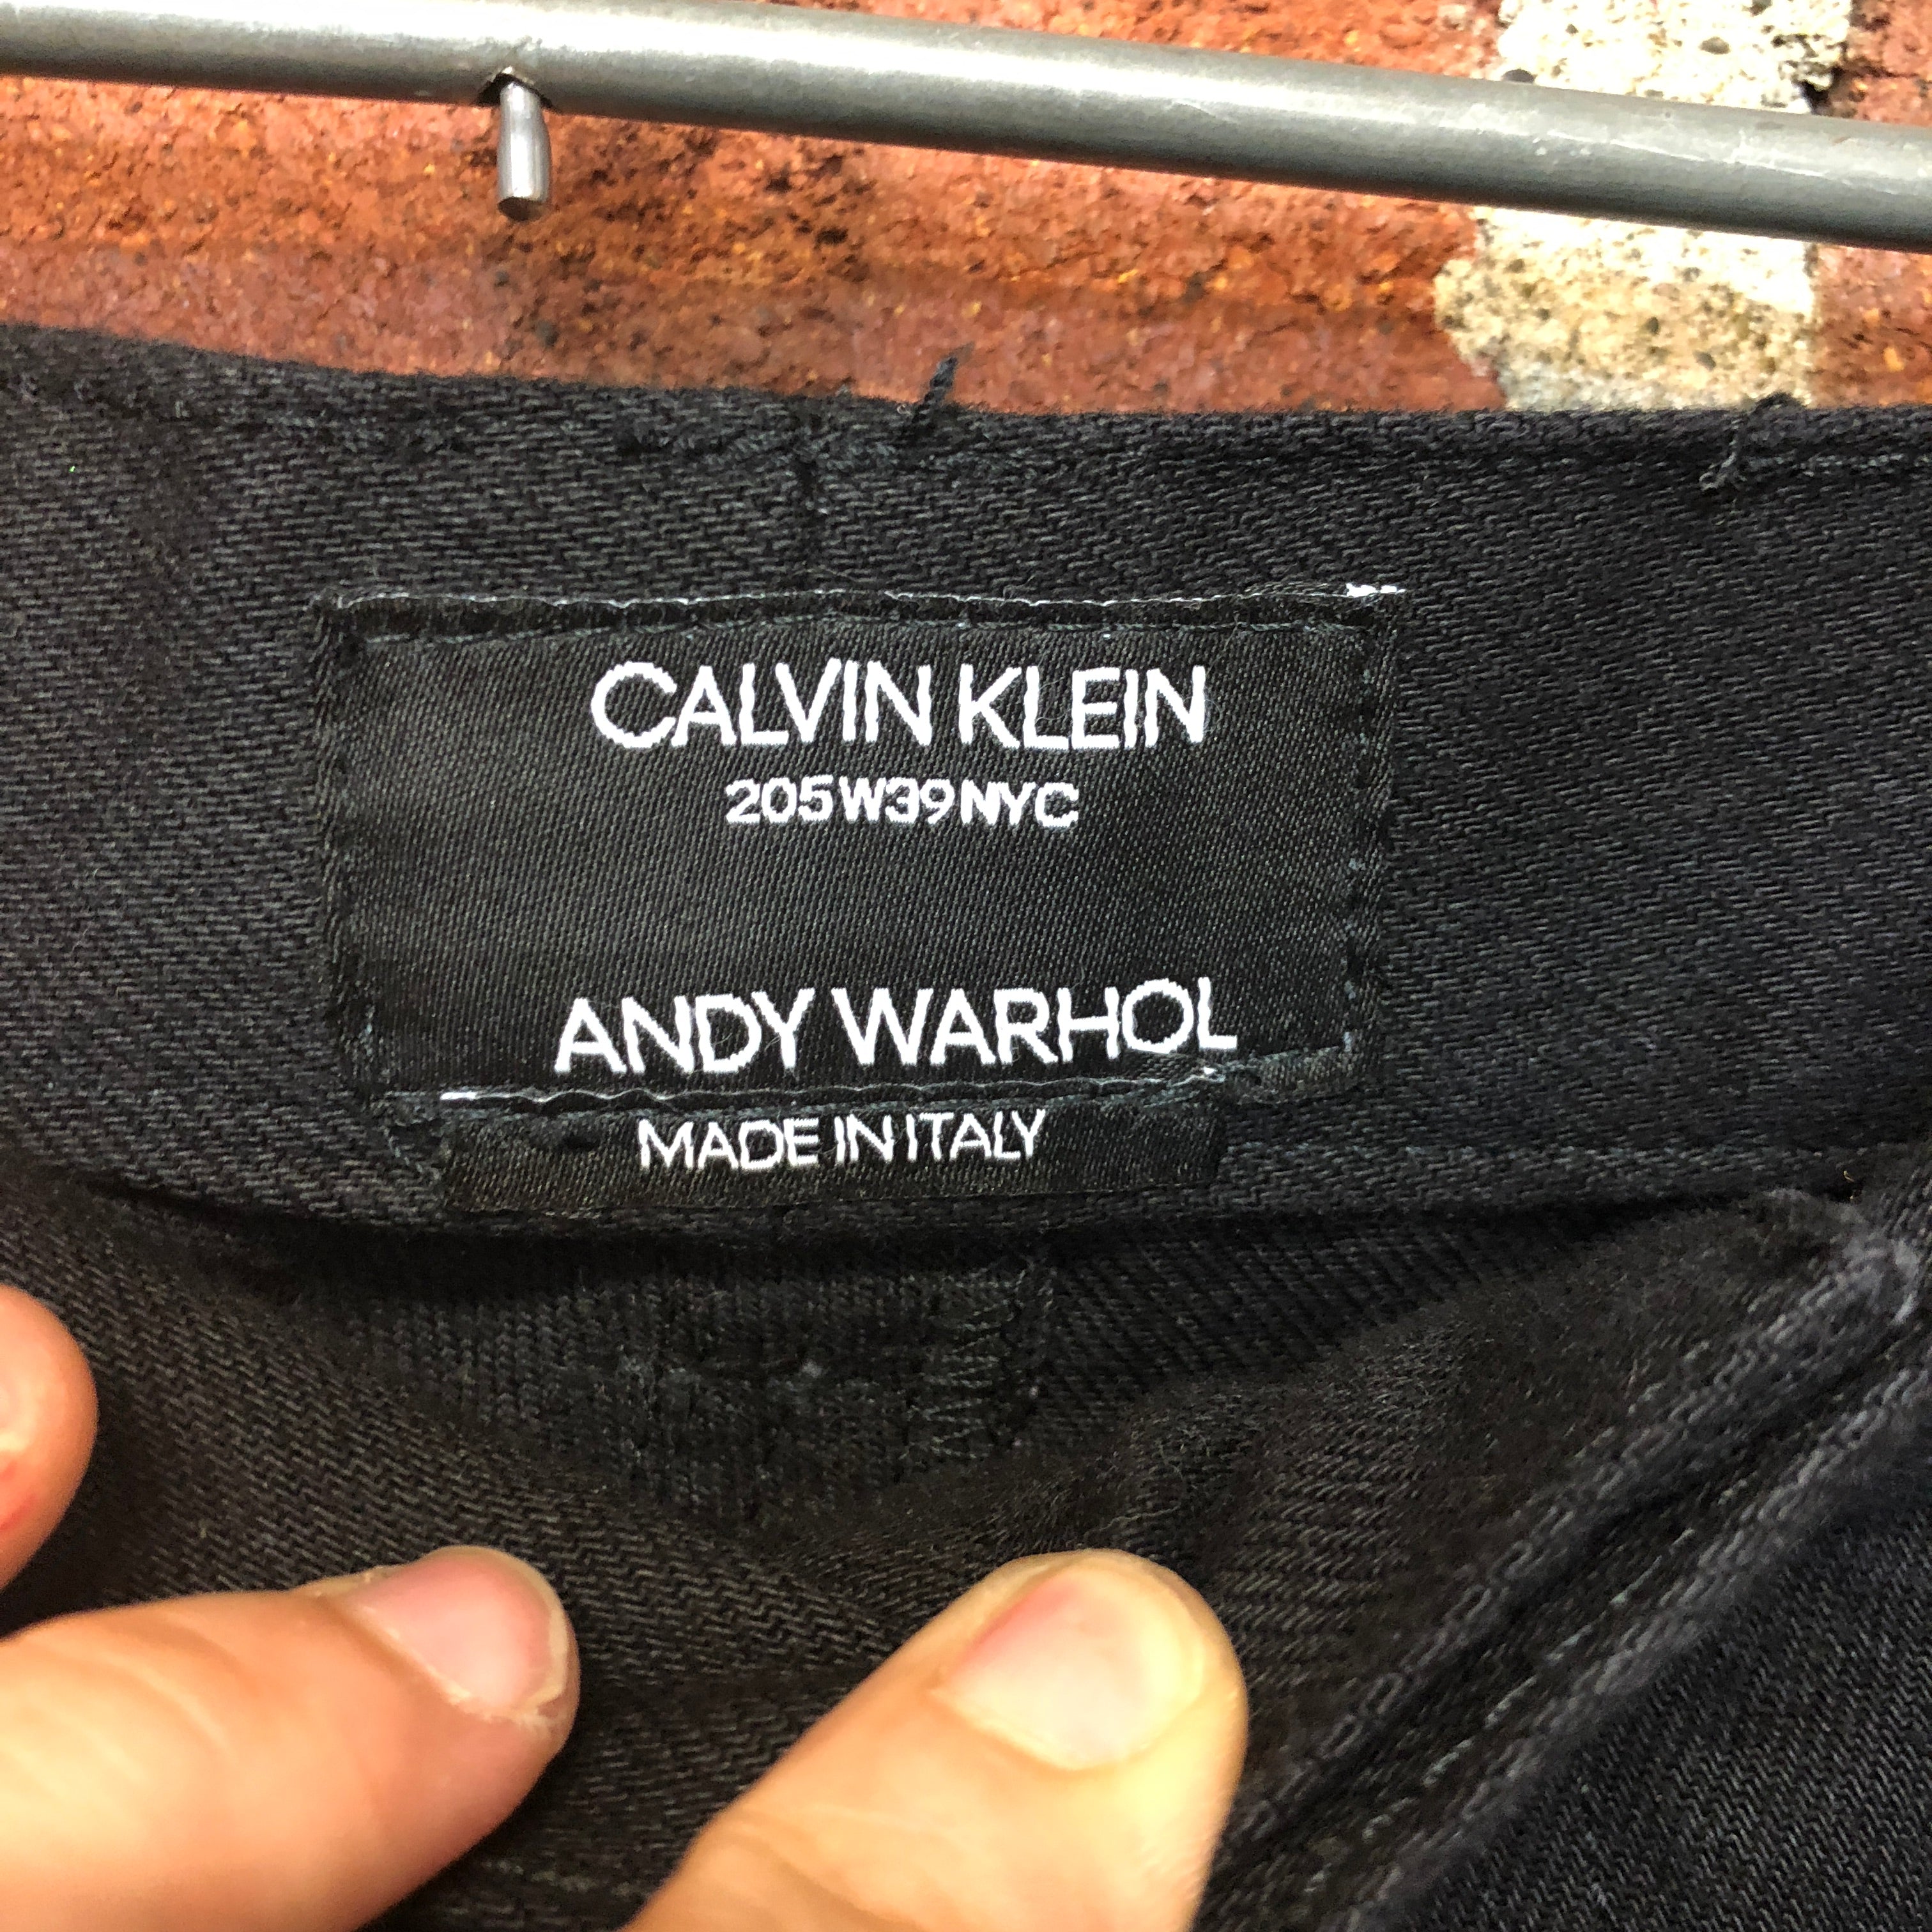 ANDY WARHOL X CALVIN KLEIN jeans